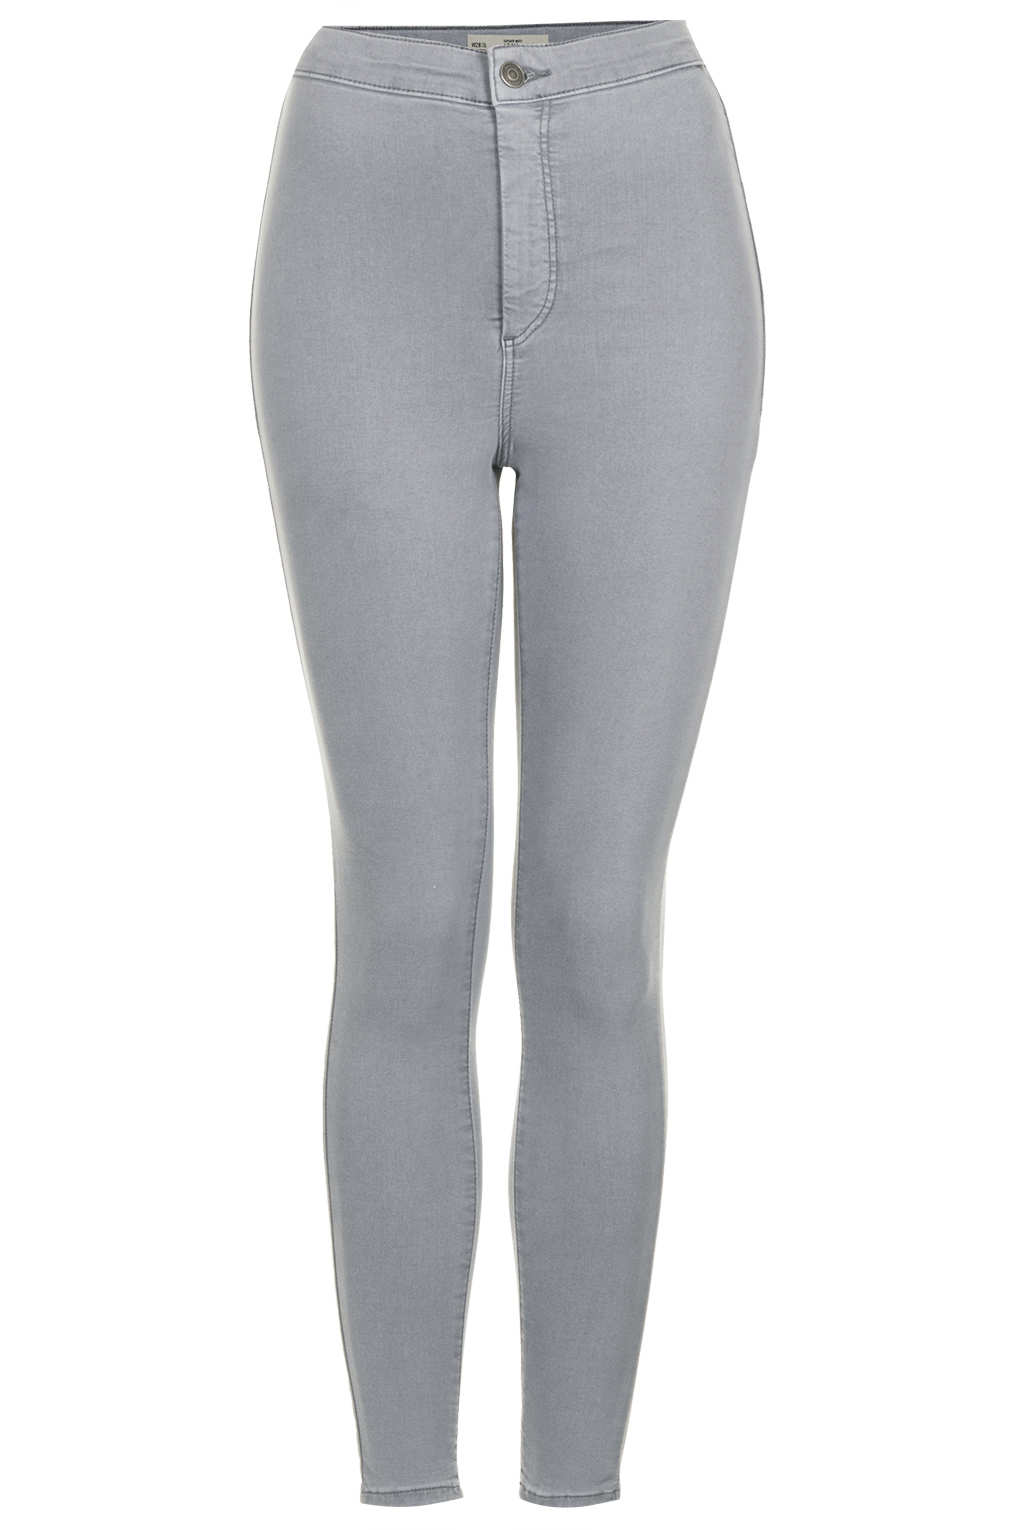 Topshop Moto Grey Wash Joni Jeans in Gray (GREY) | Lyst